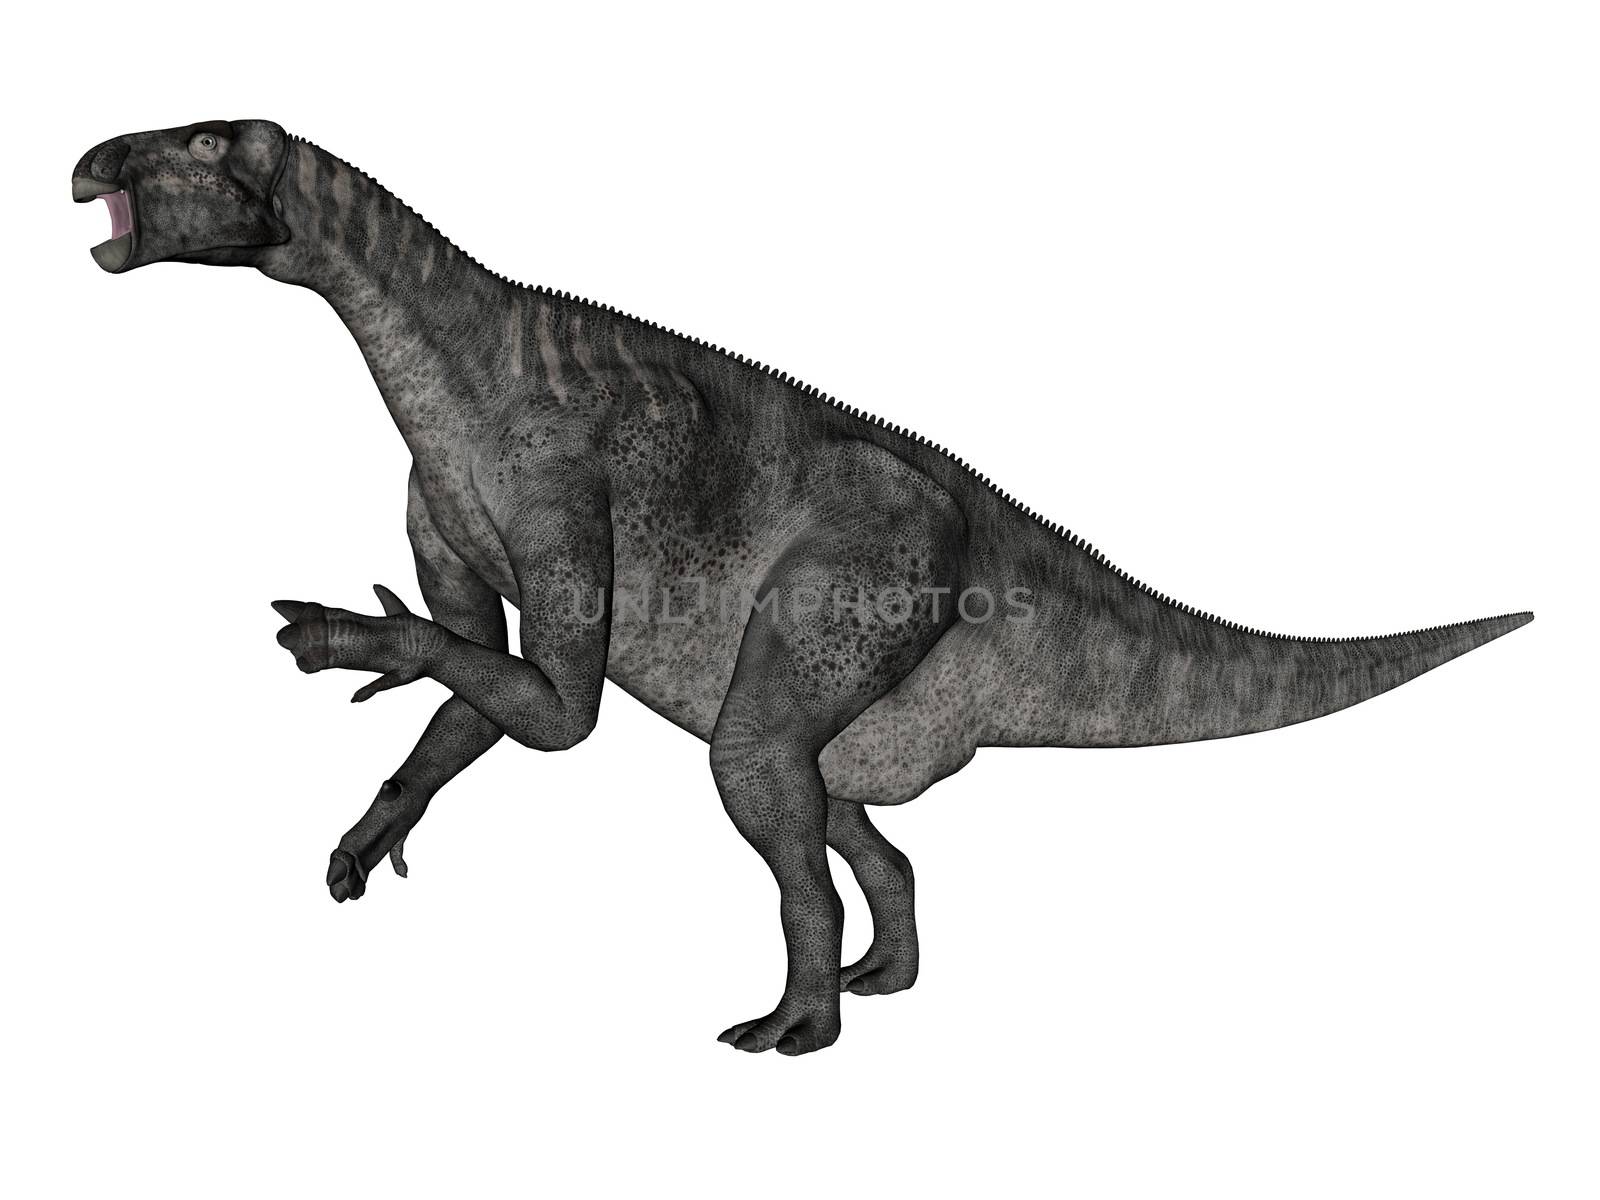 Iguanodon dinosaur roaring while walking isolated in white background - 3D render